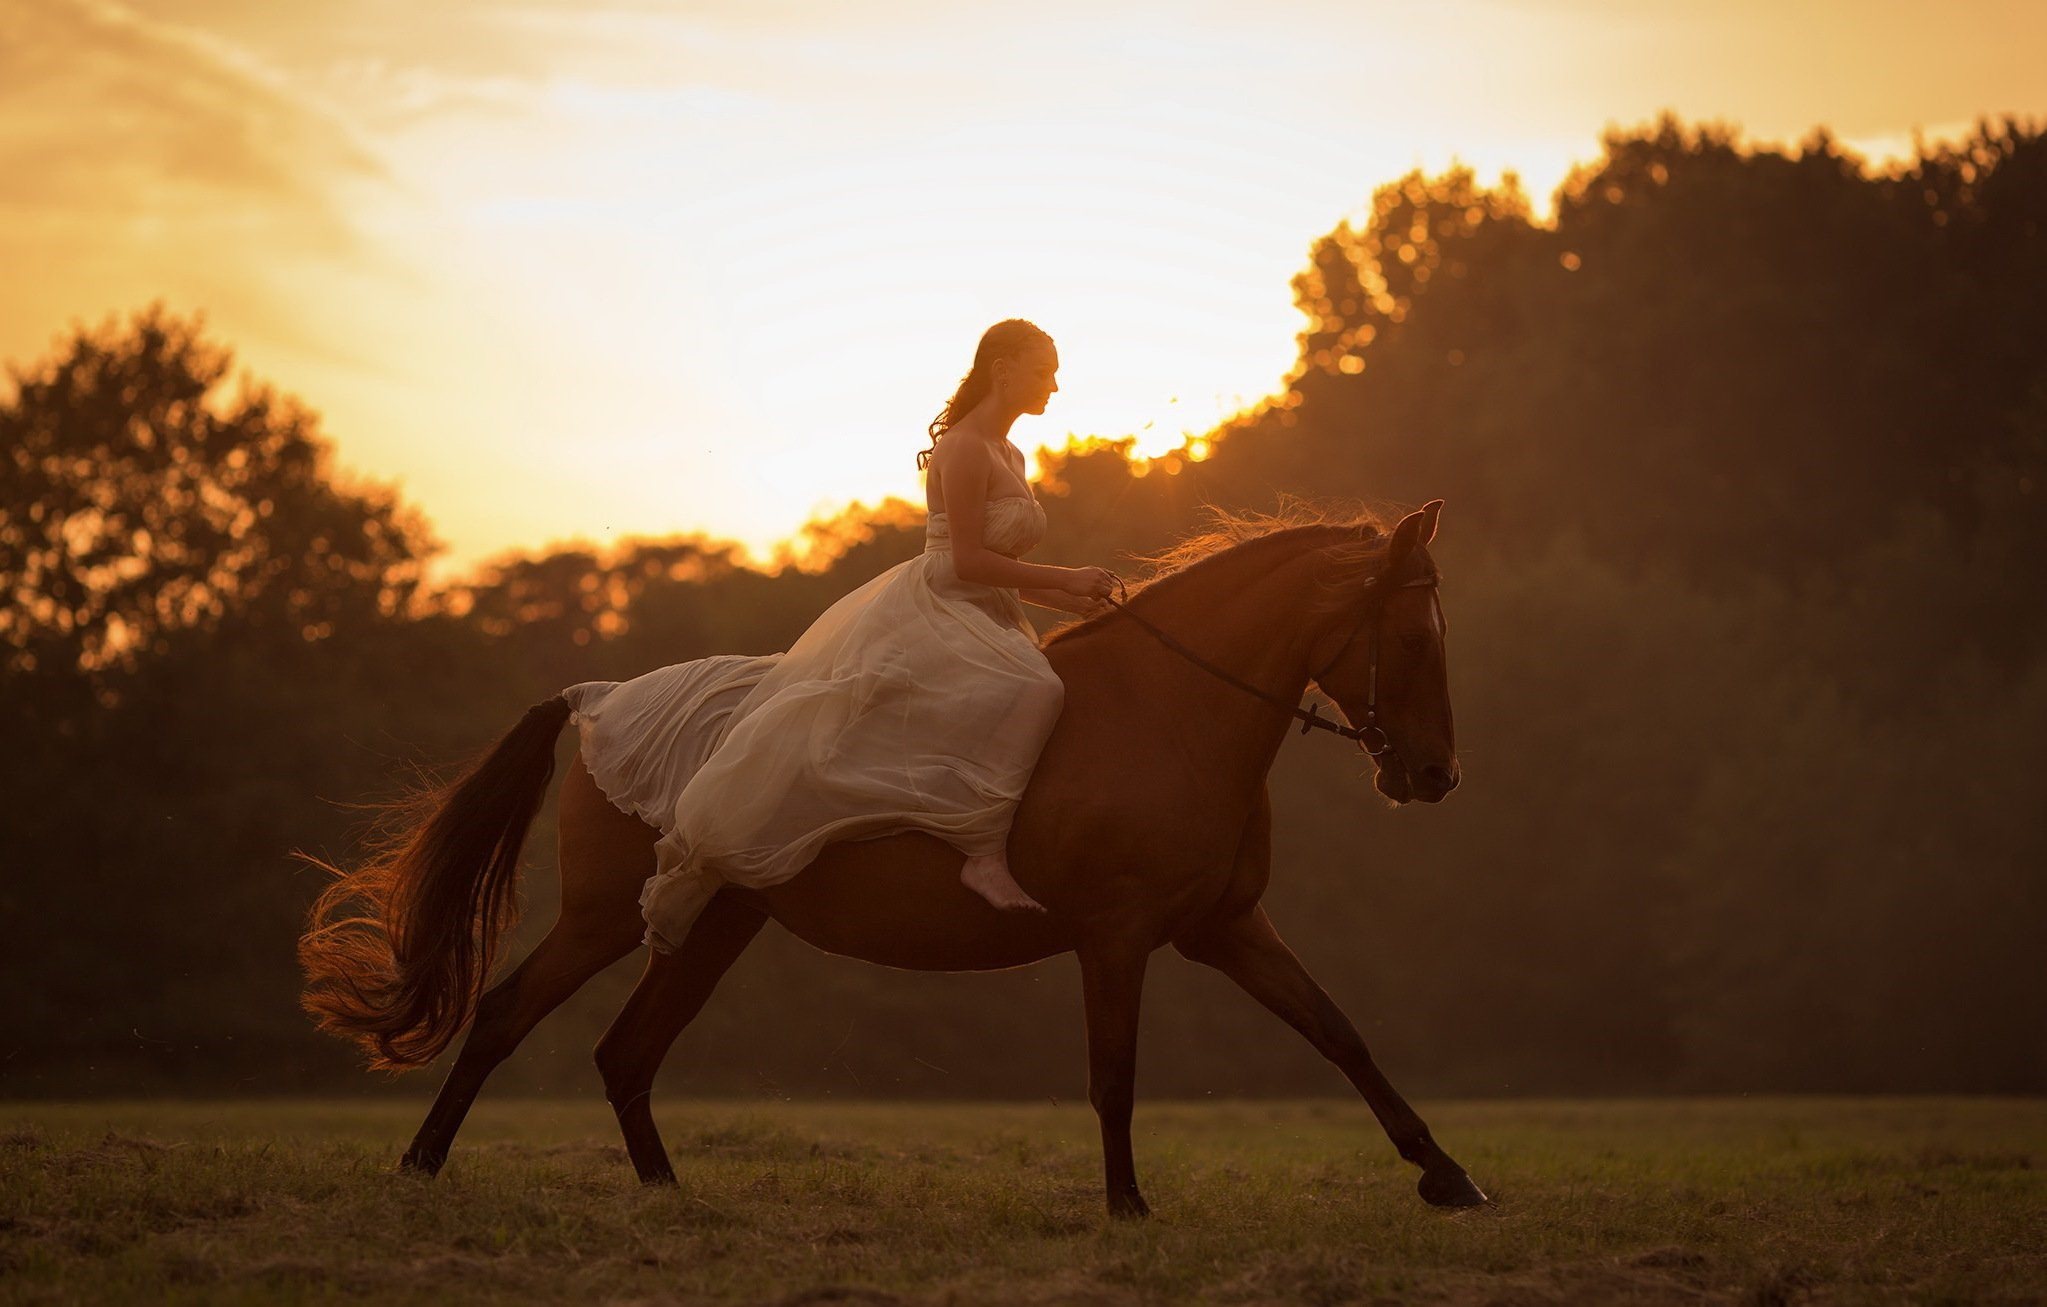 Проскачу на коне. Девушка на коне. Девушка верхом на лошади на закате. Лошадь скачет. Девушка скачет на лошади.